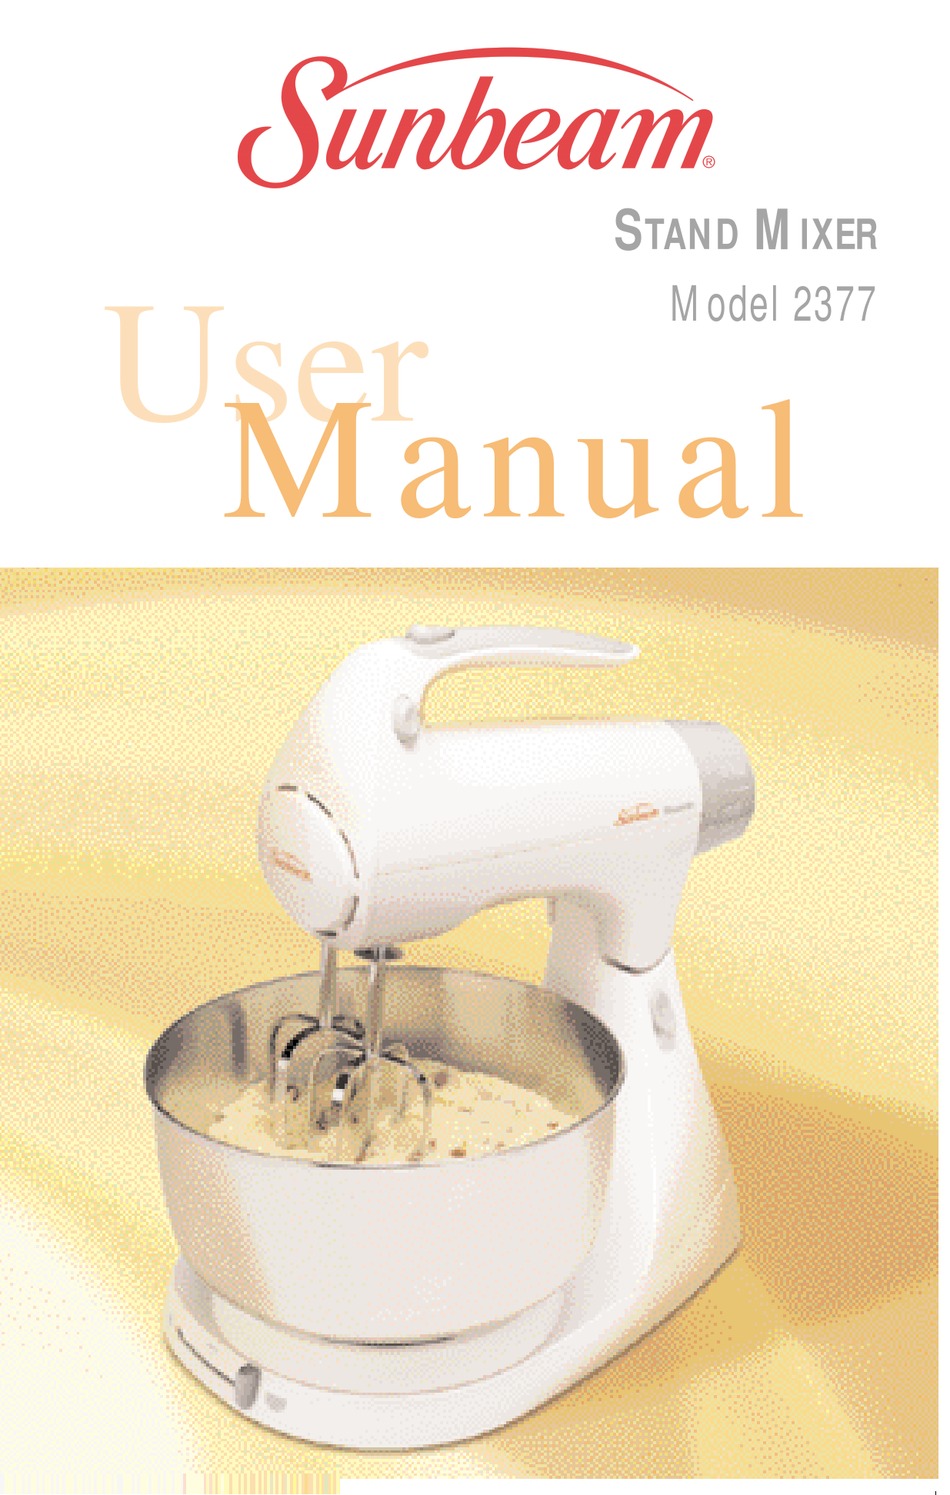 Sunbeam/oster Stand Mixer Replacement Dough Hooks for Models 2372